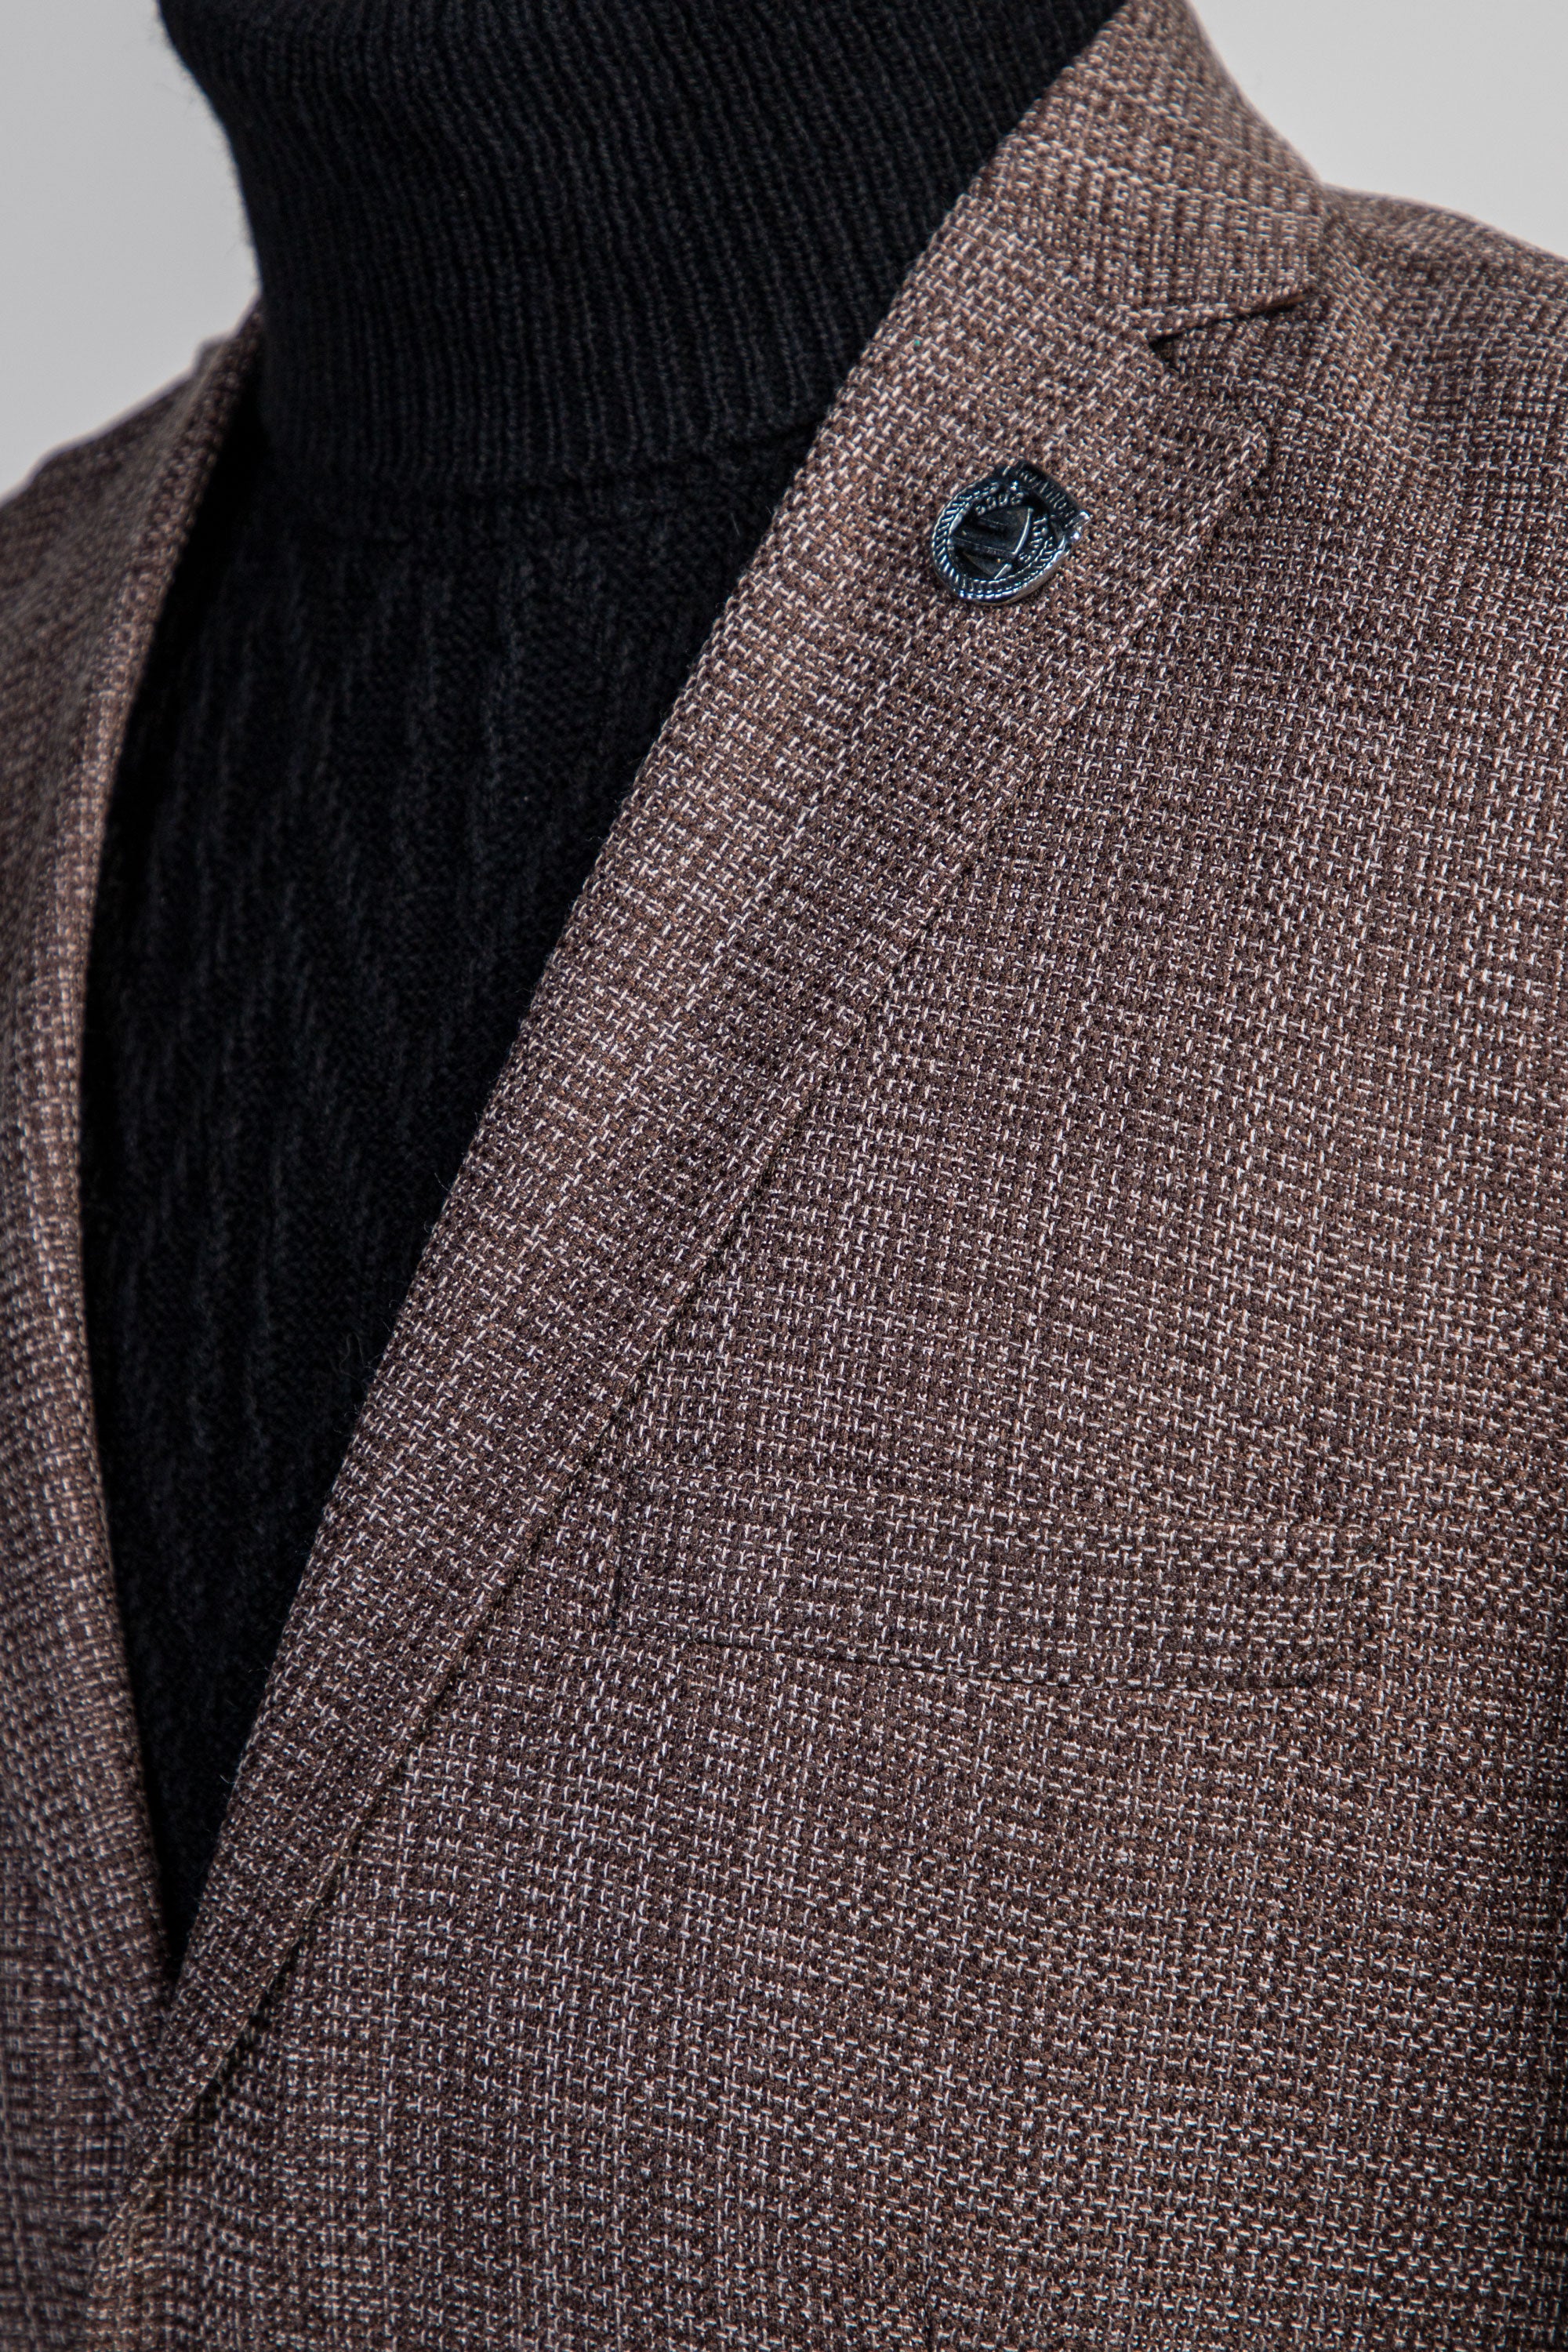 Formal Light Brown Coat